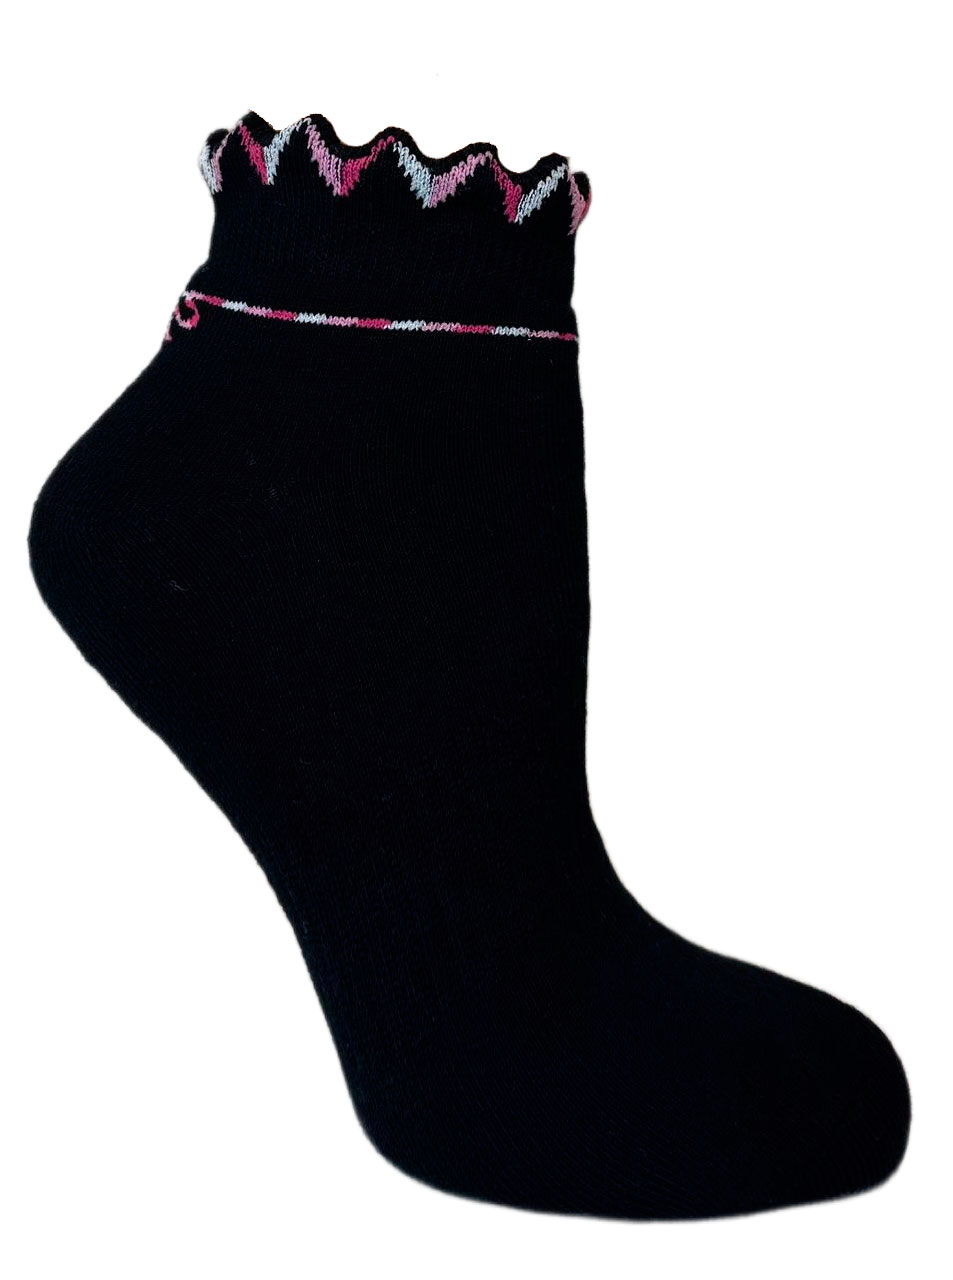 Зимние махровые носки Гамма Кокетка С362